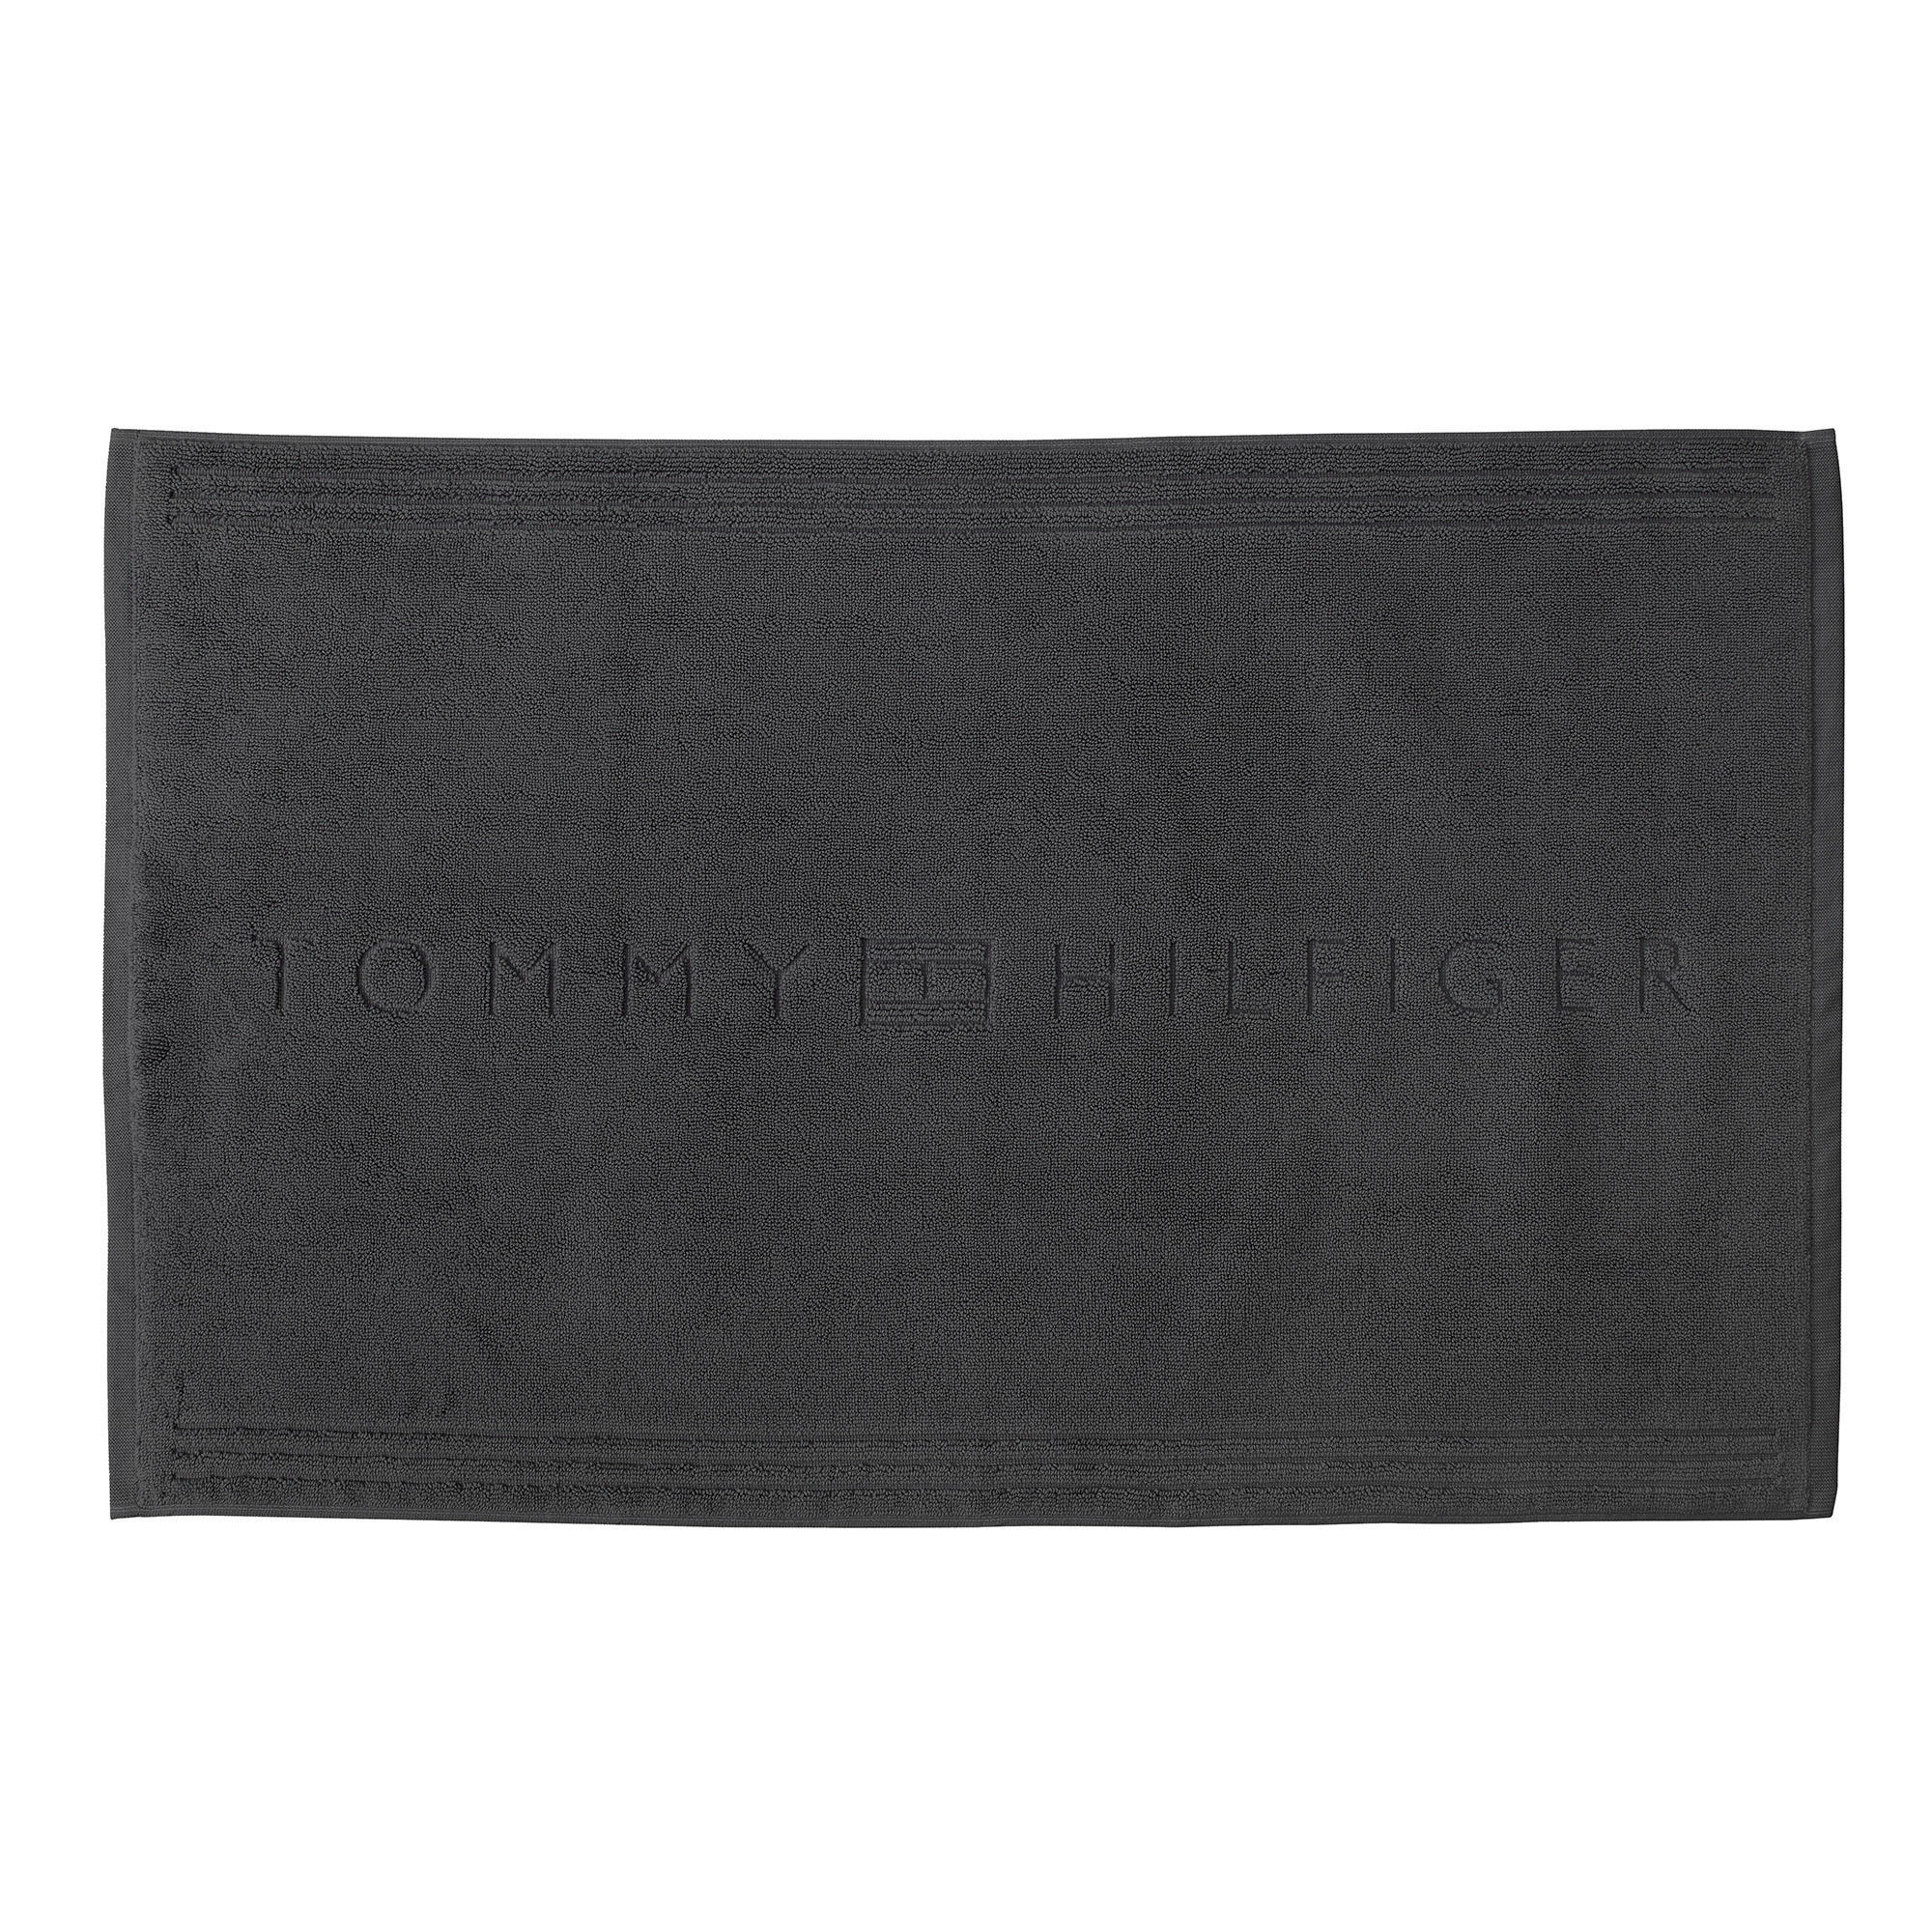 BADEMATTE  Plain 50/80 cm  - Dunkelgrau, Basics, Textil (50/80cm) - Tommy Hilfiger